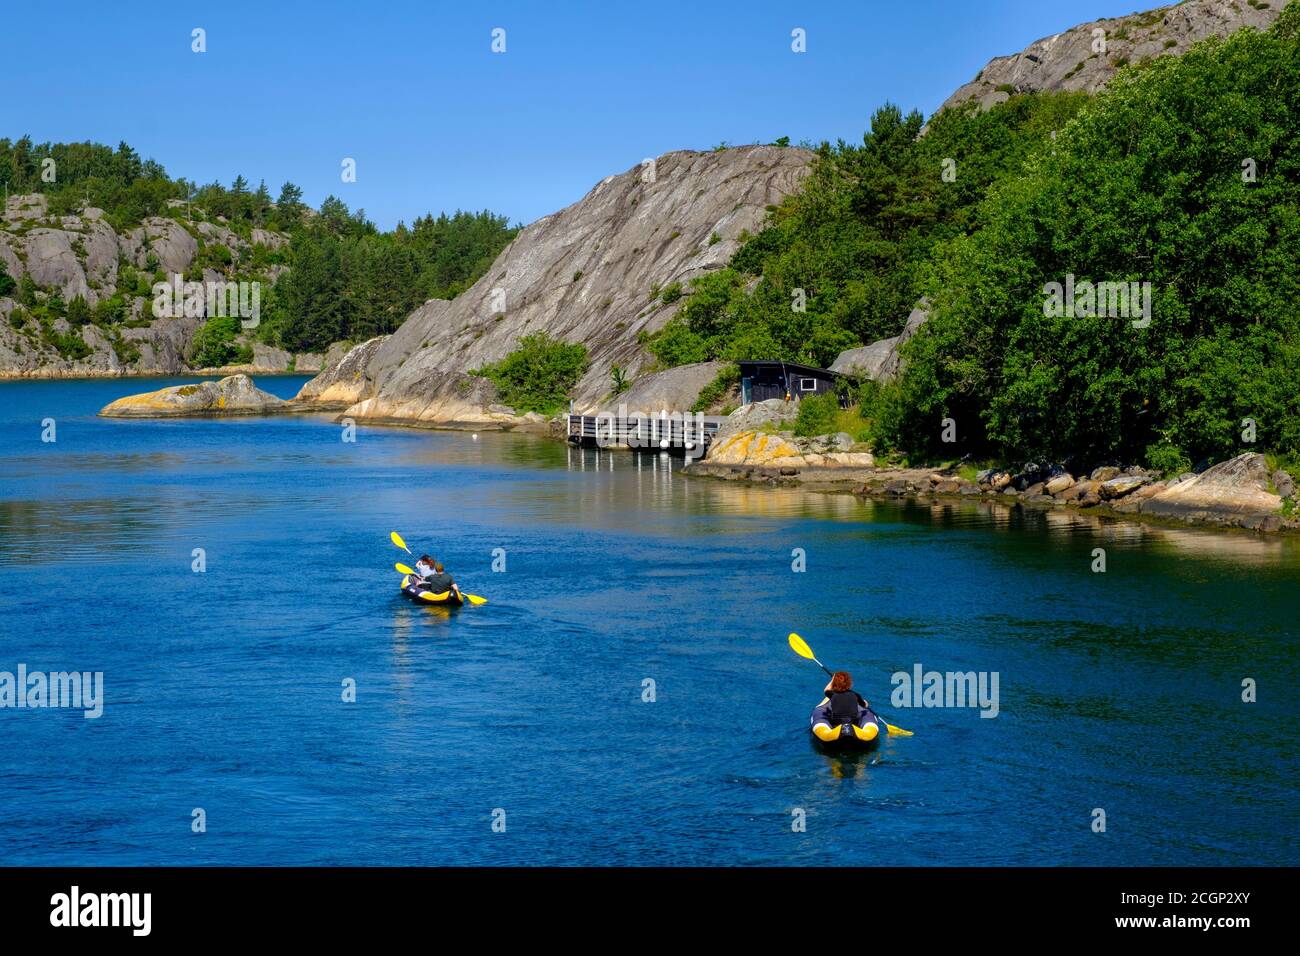 Kayaker, canoeist, Maloen island, archipelago, Bohuslaen province, Vaestra Goetalands laen province, southern Sweden, Sweden Stock Photo